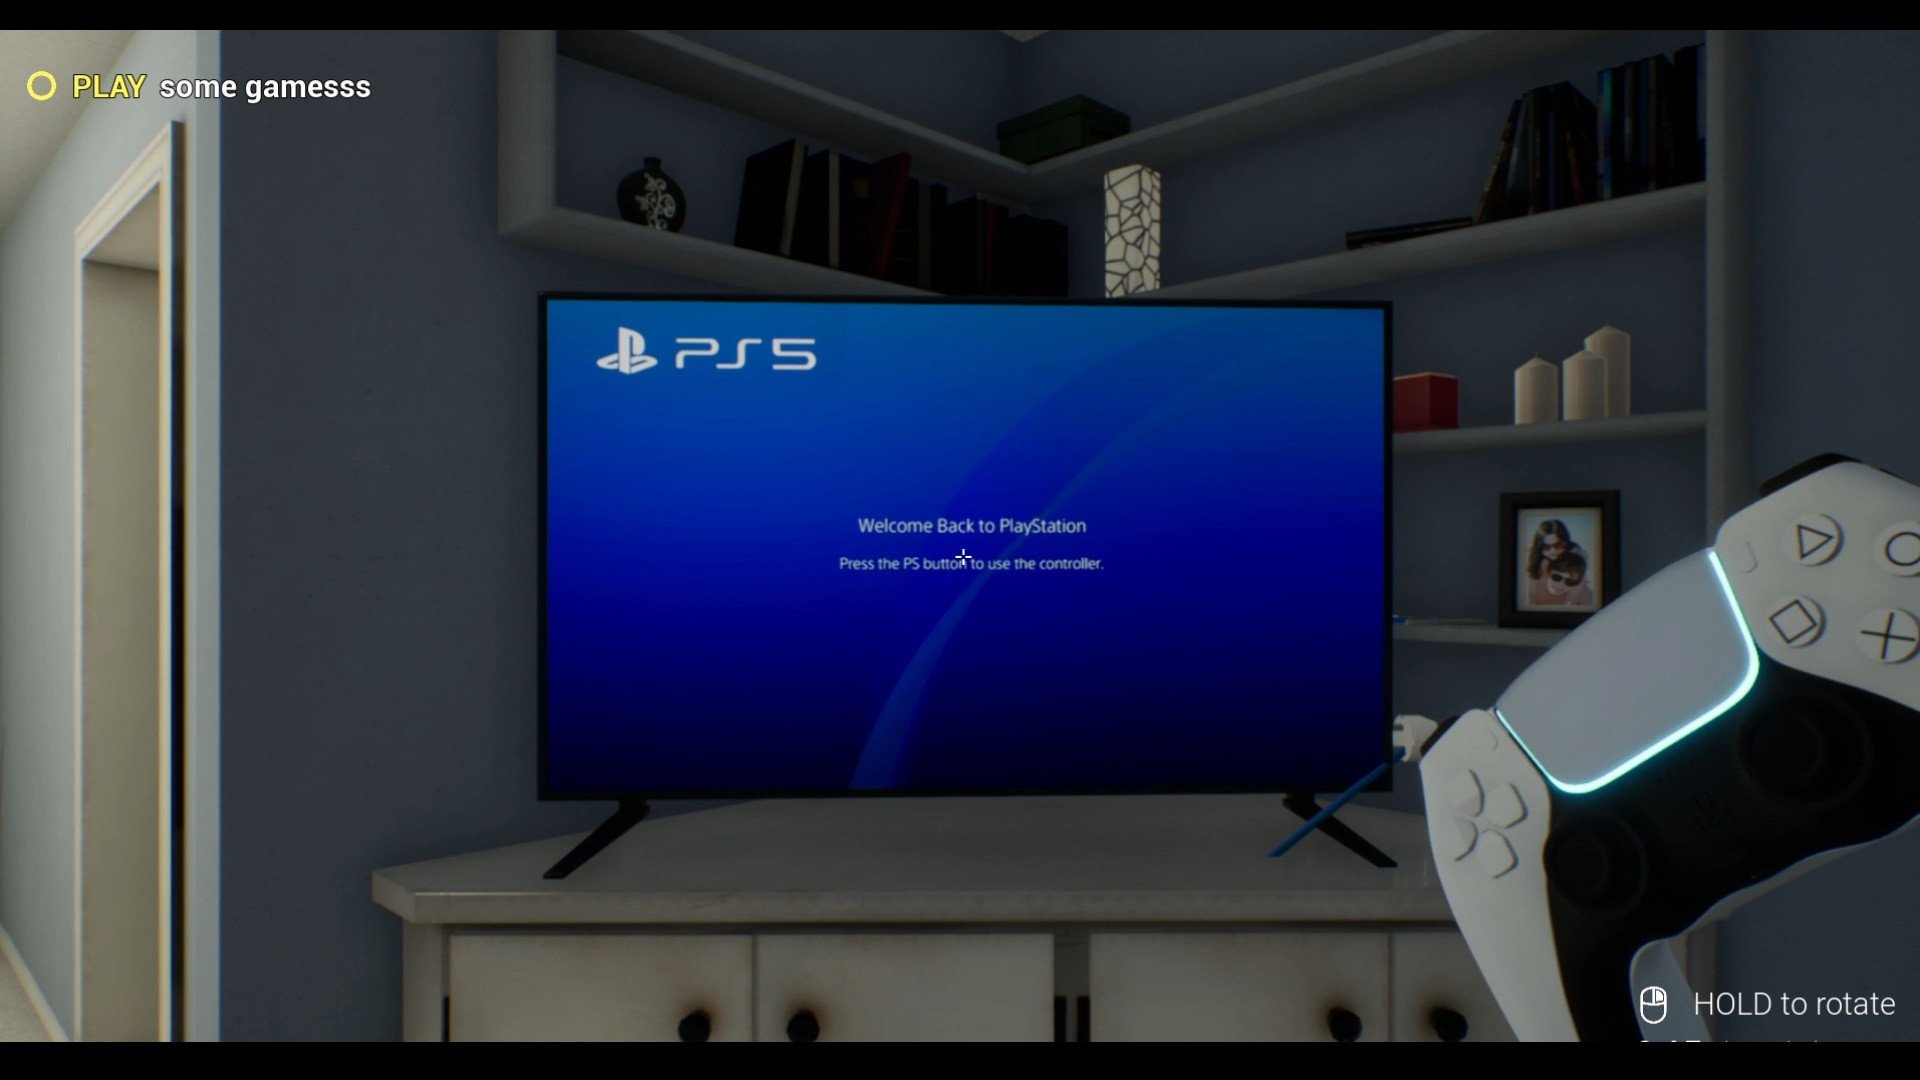 Videogame προσφέρει την εμπειρία του PS5, αν δεν προλάβατε να κάνετε προ-παραγγελία